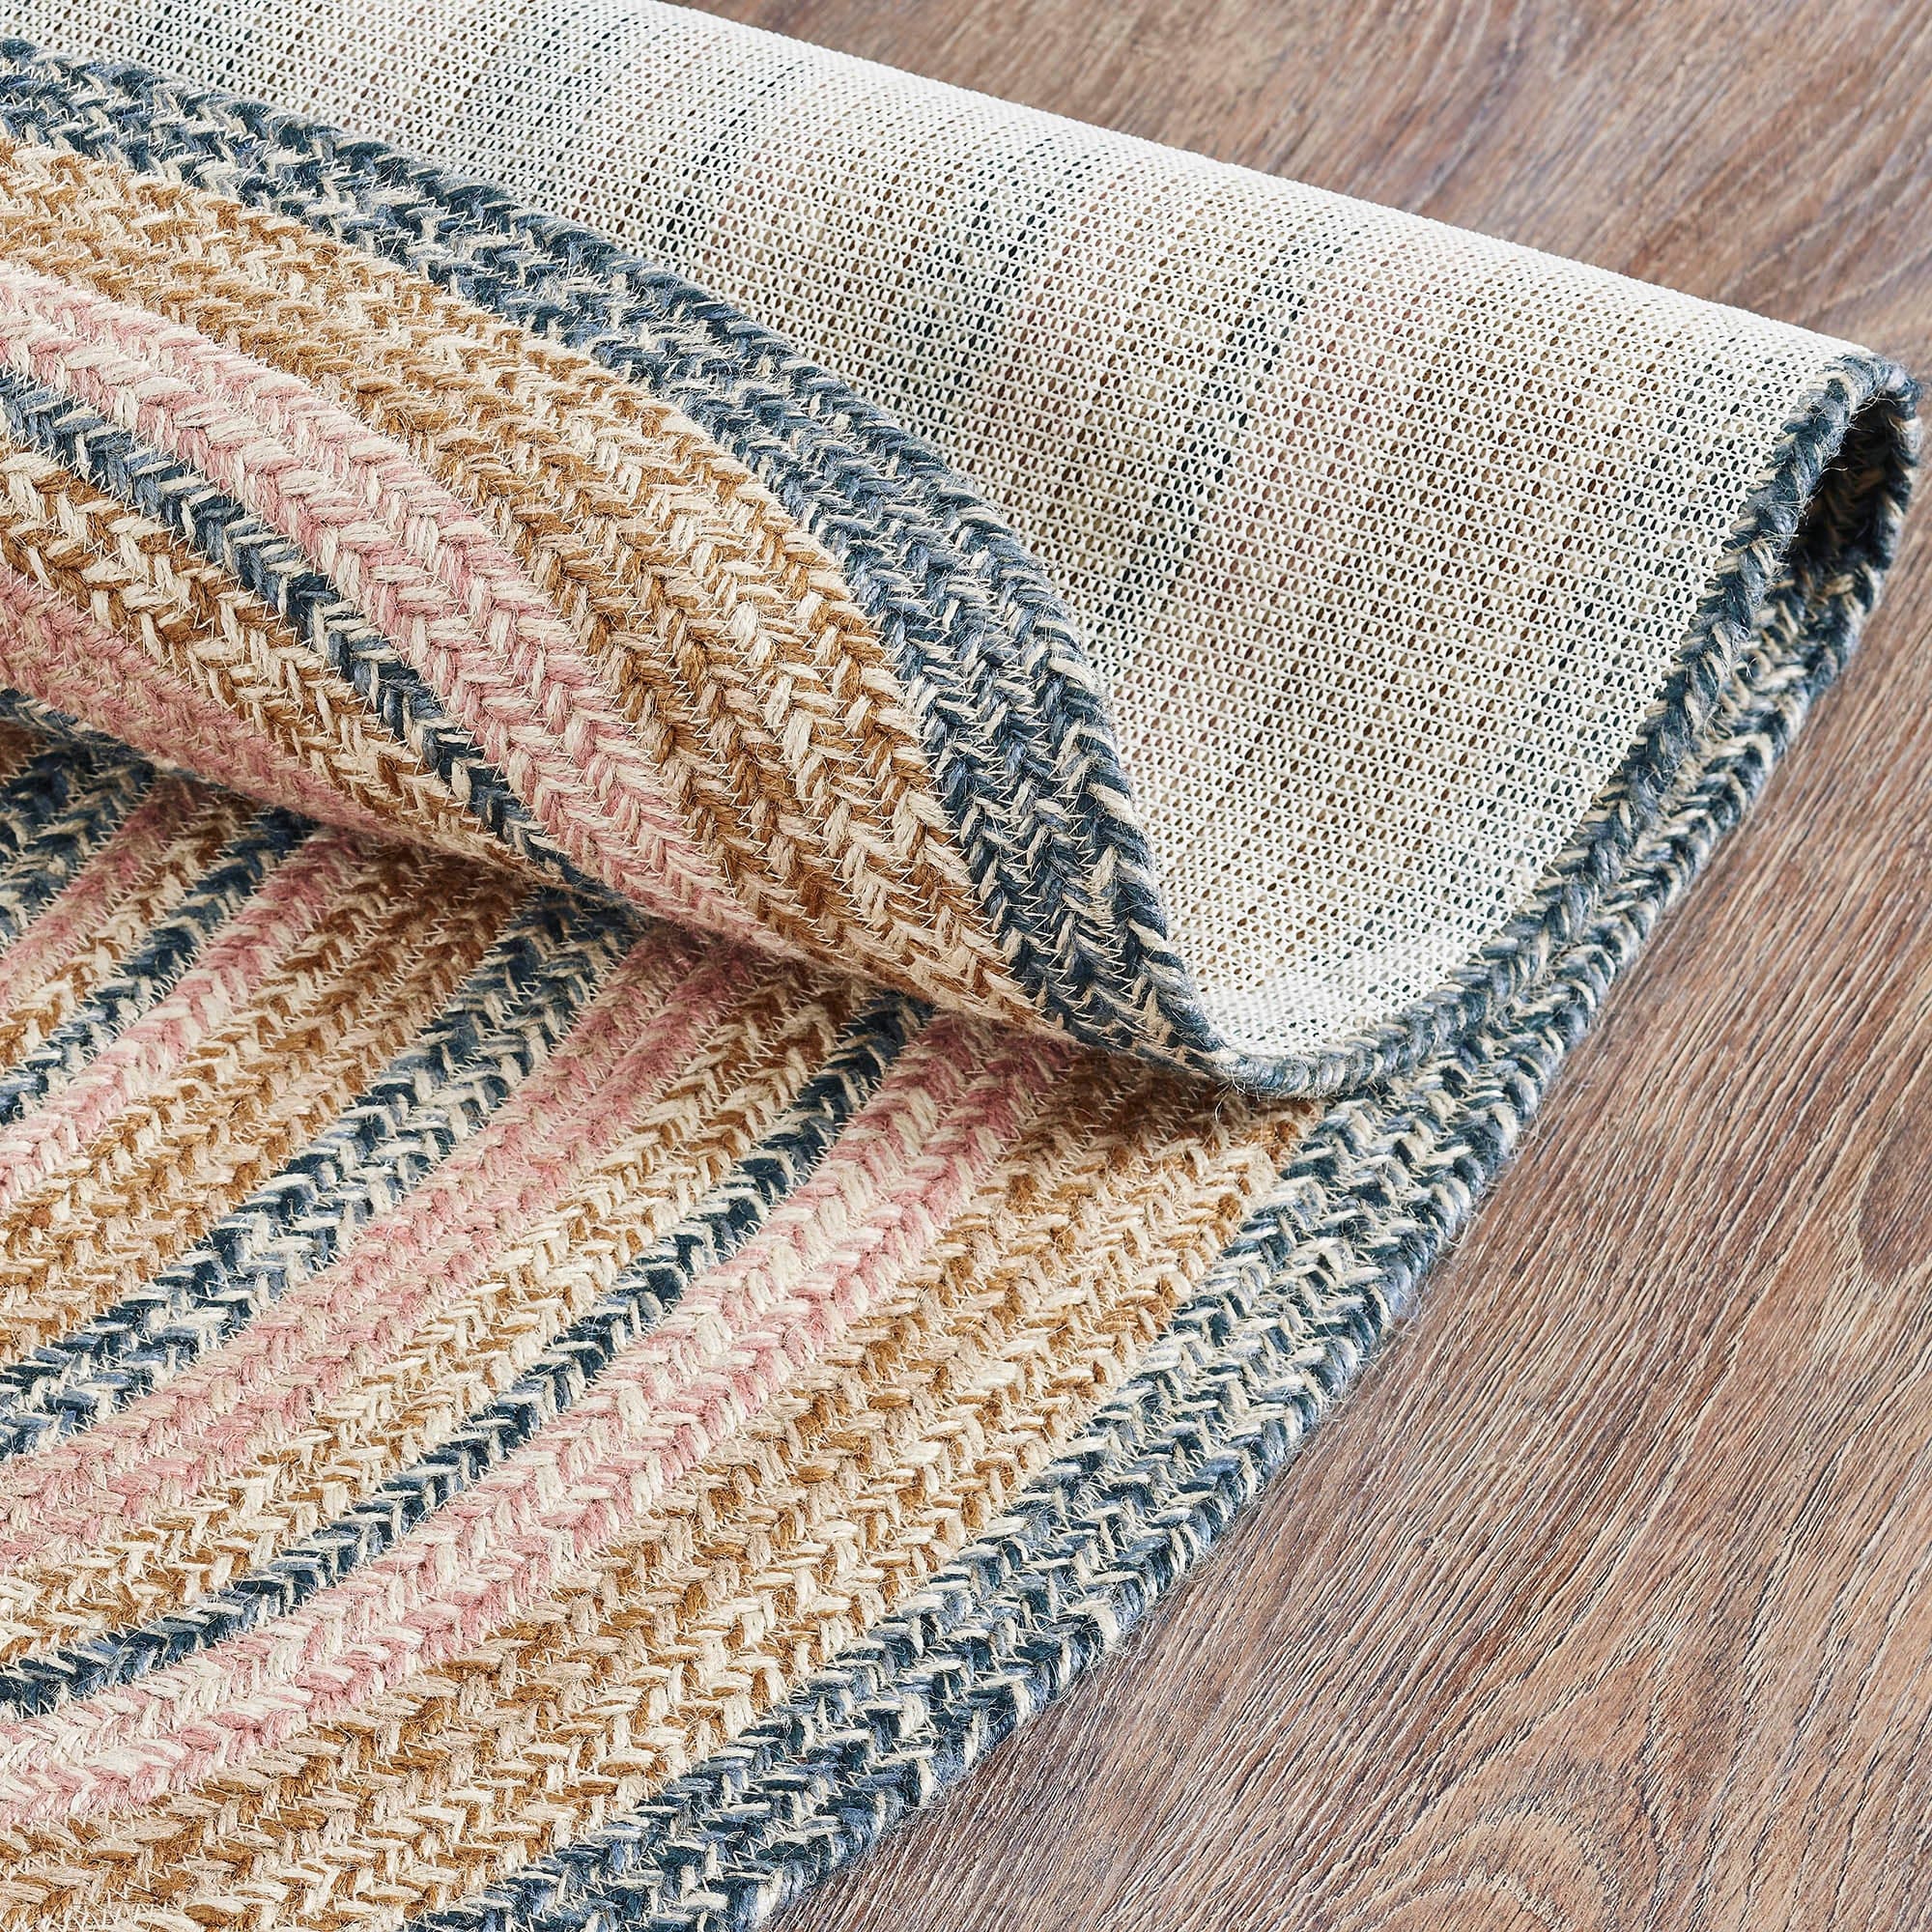 Braided Jute Rug – Natural, Pear-shaped rug